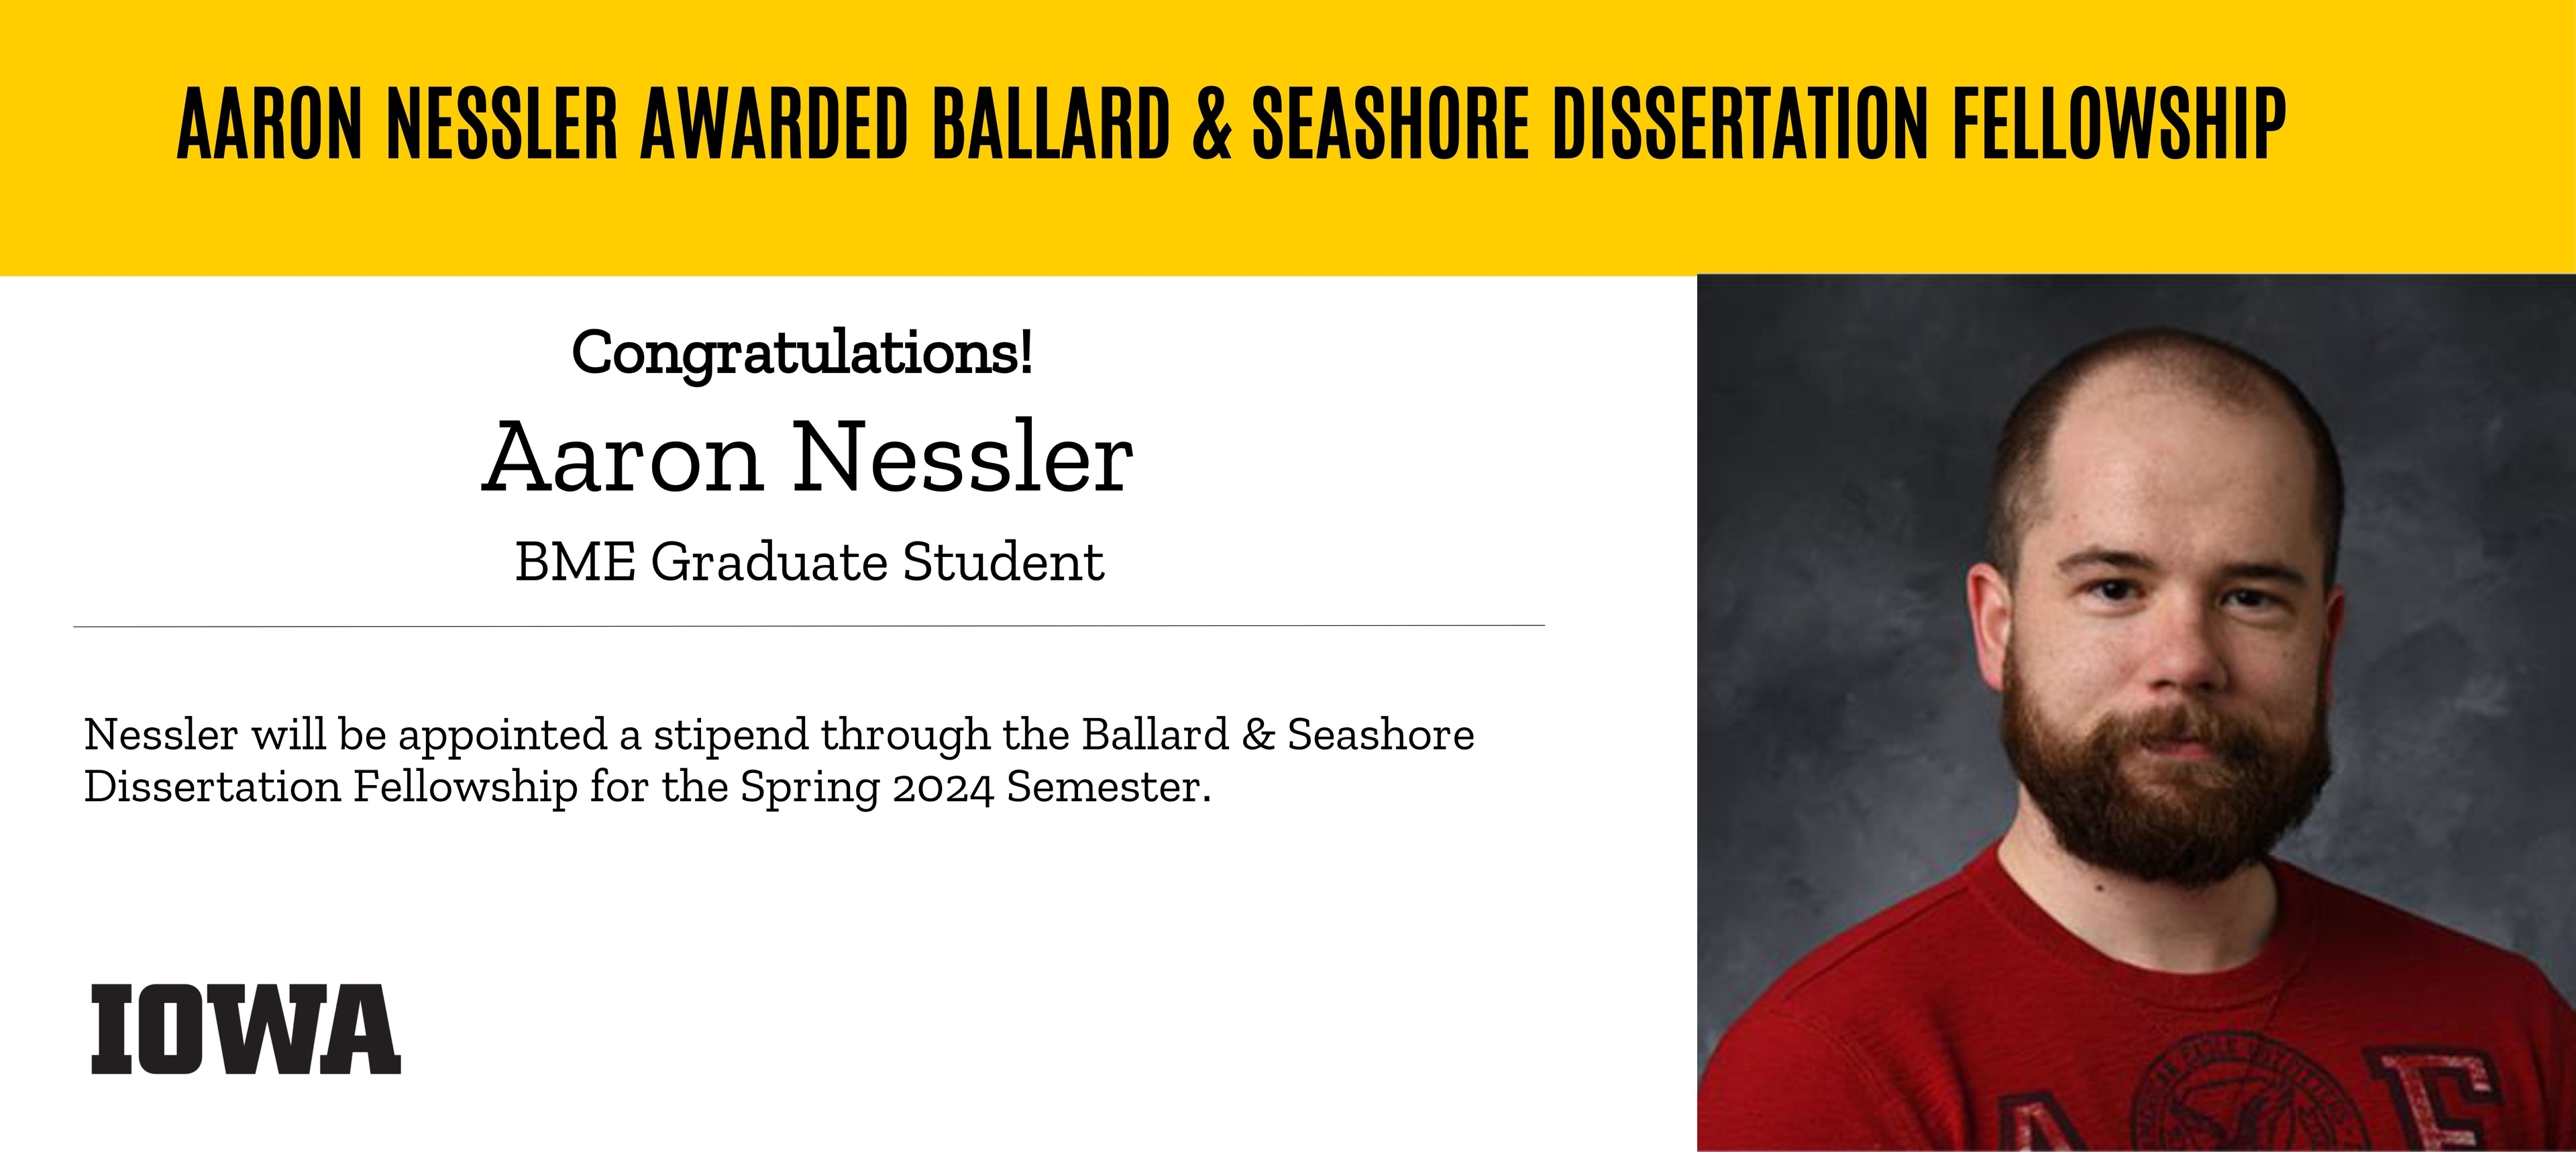 Picture of Aaron Nessler, who is awarded Ballard & Seashore Dissertation Fellowship for 2024